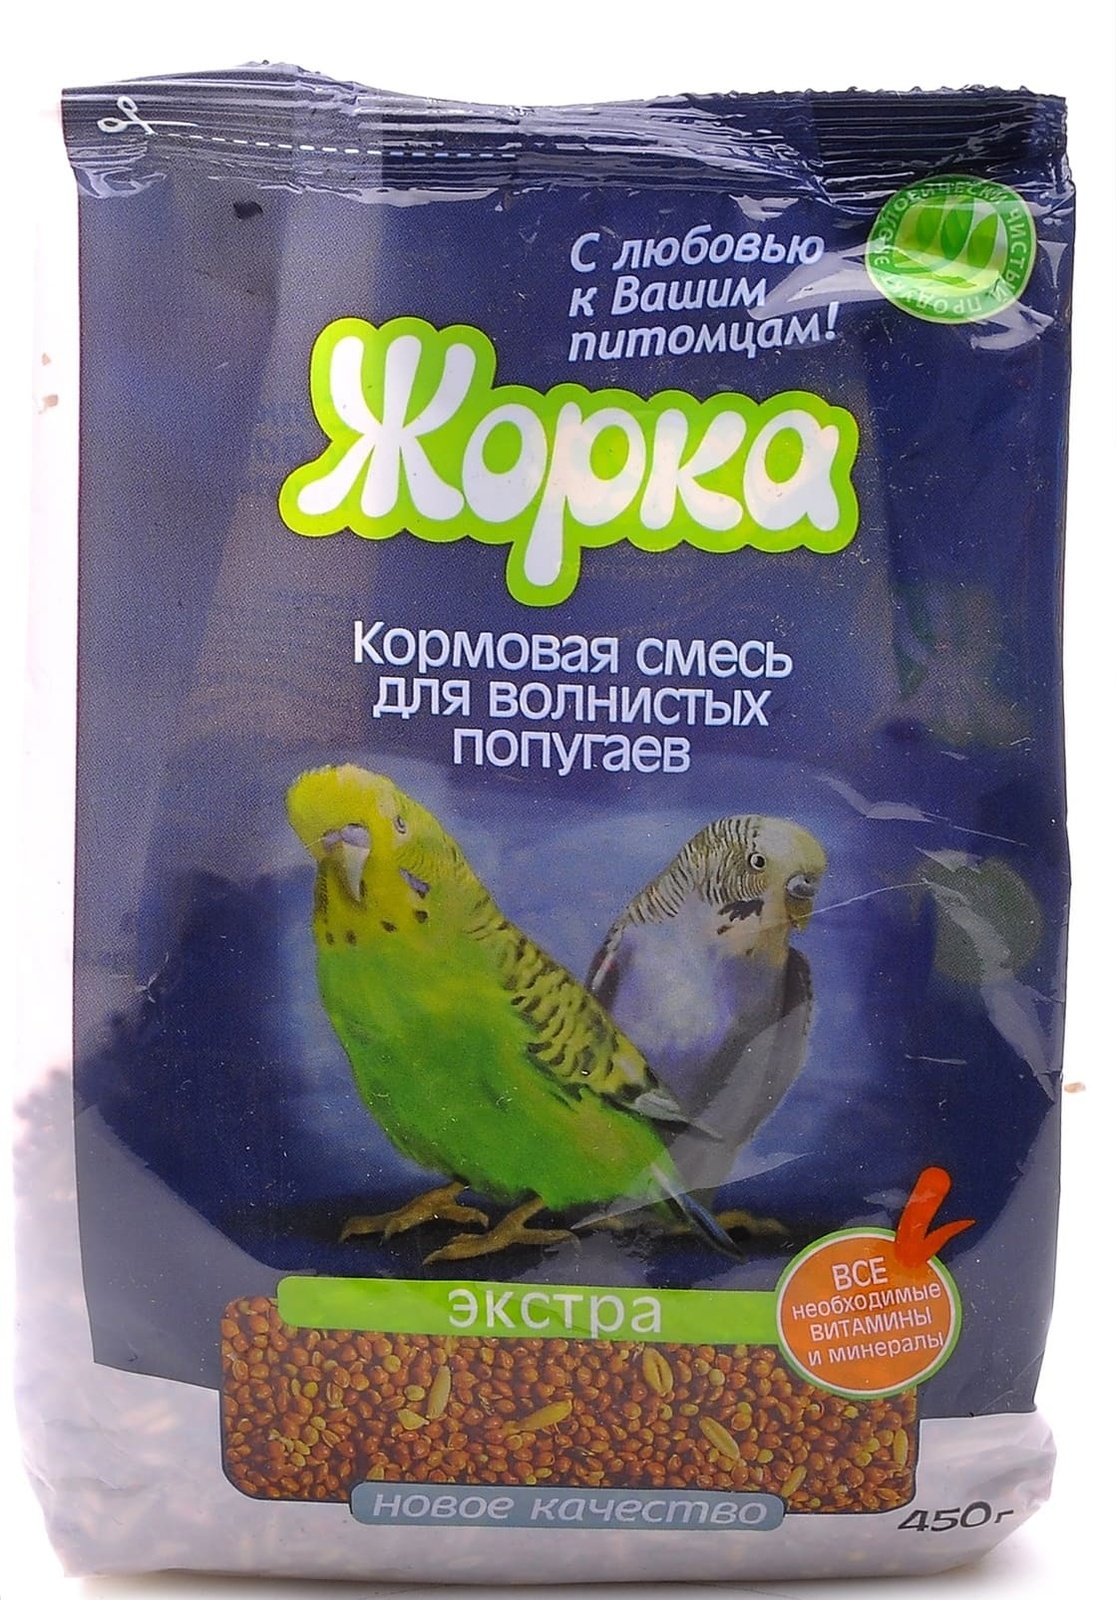 Жорка Жорка lux для волнистых попугаев Экстра (пакет) (450 г) жорка жорка 2шт палочки для волнистых попугаев 70 г